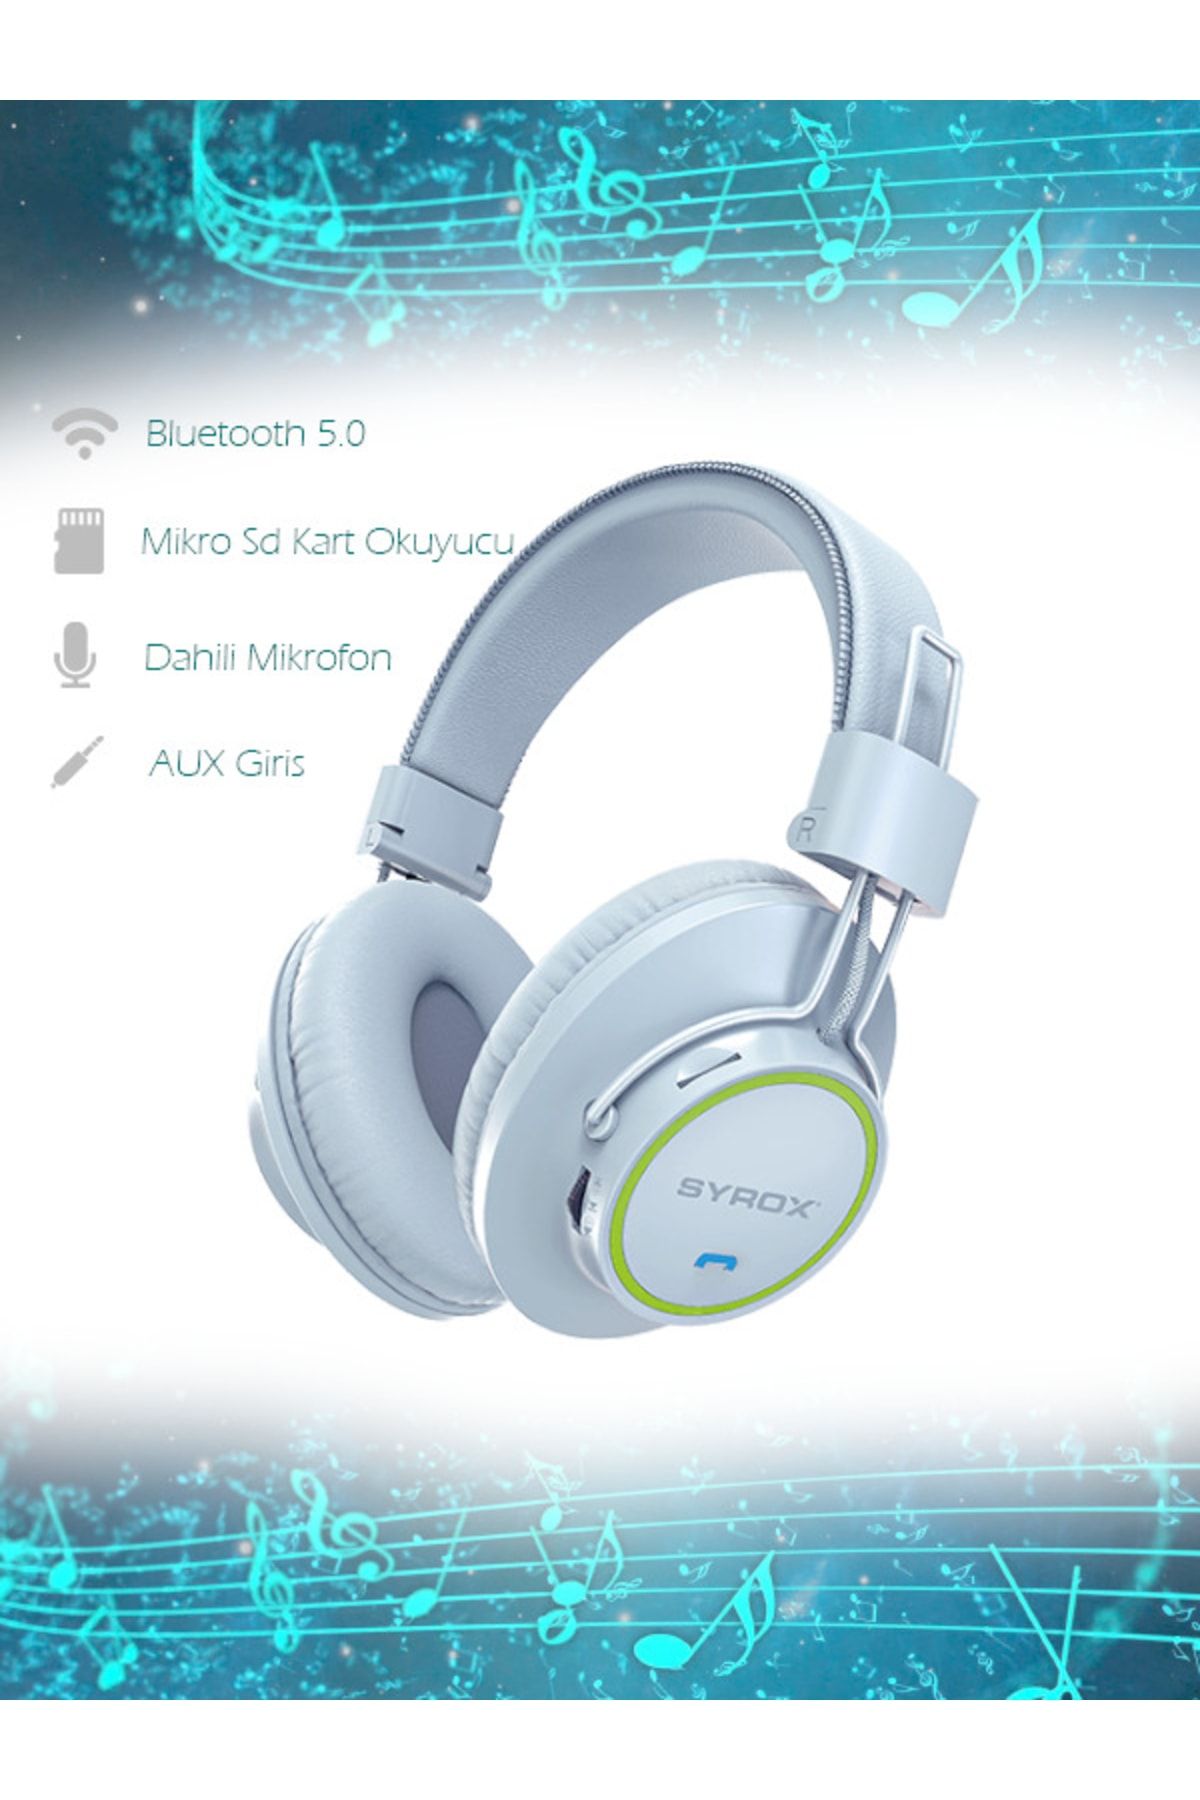 Syrox Kulak Üstü Bluetooth Kulaklık Mikro Sd Kart Okuyucu / Aux Giriş / Dahili Mikrofon